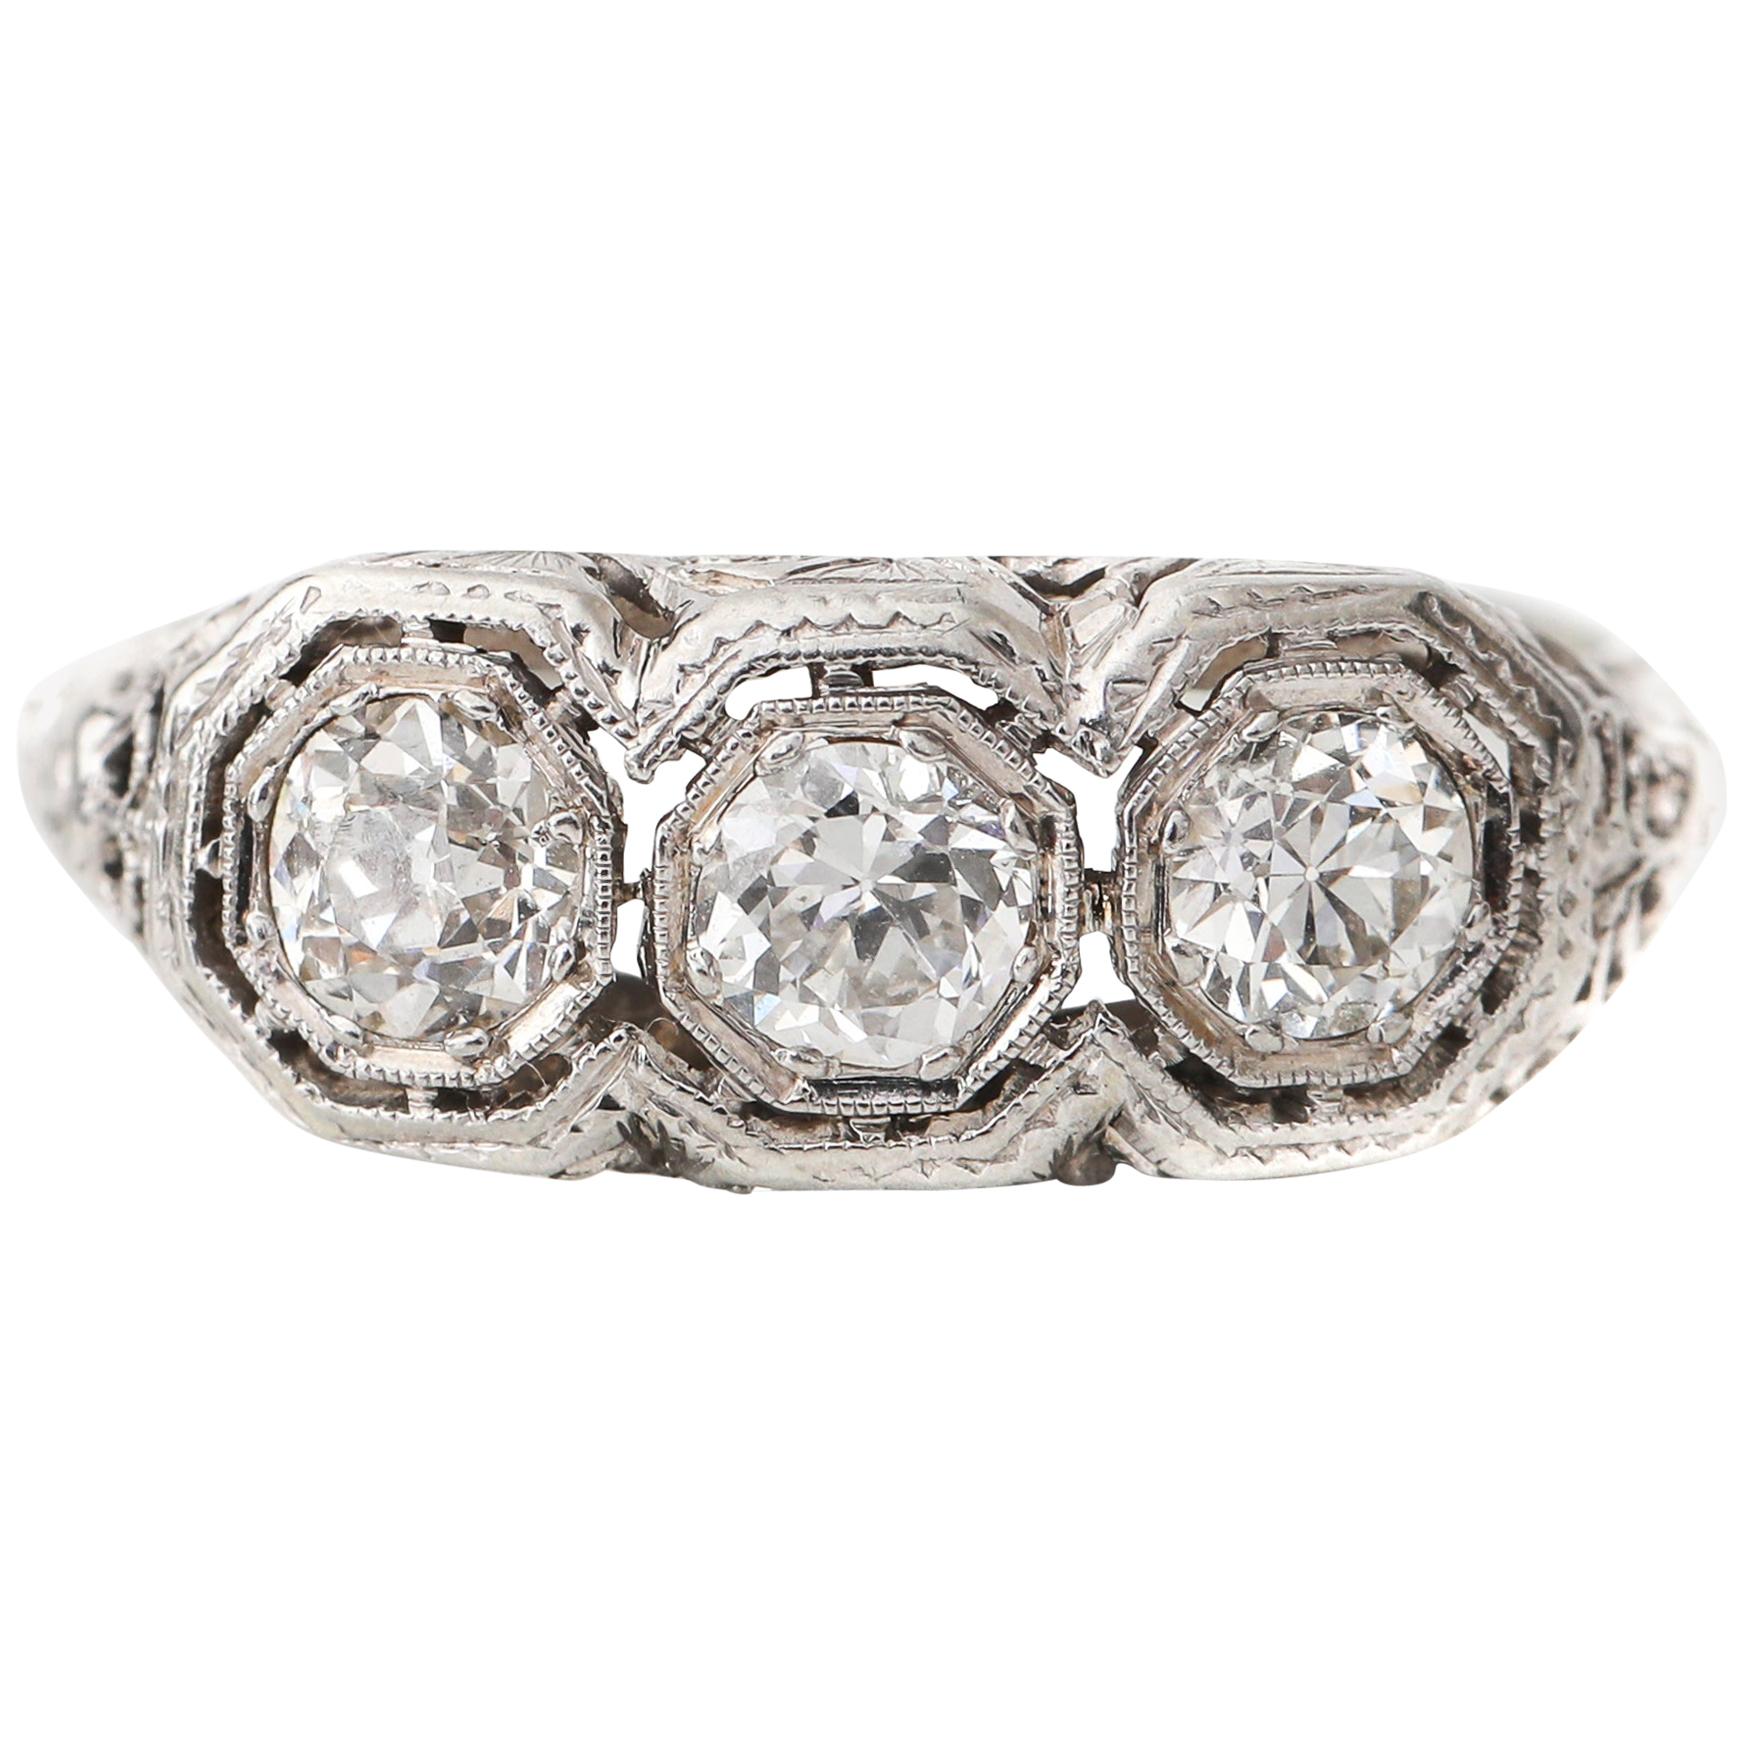 Victorian Antique Three-Diamond Filigree Low Profile Vintage Engagement Ring